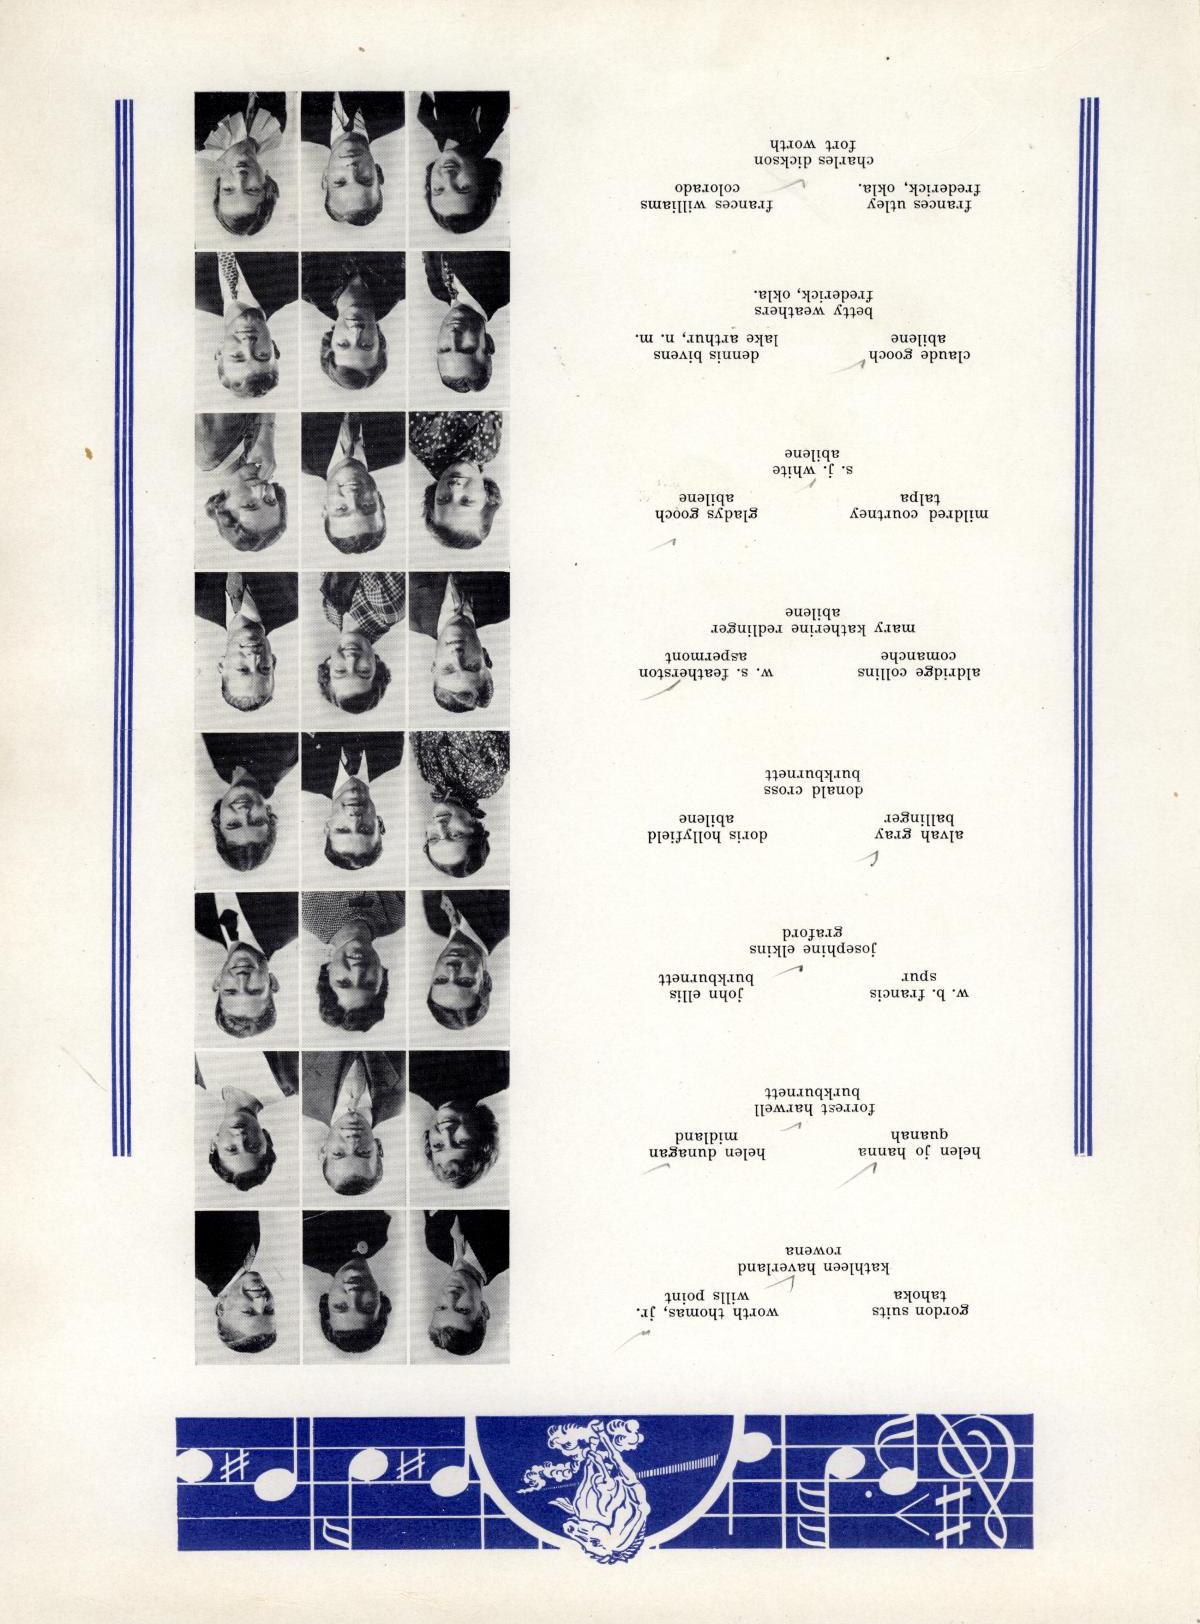 The Bronco, Yearbook of Hardin-Simmons University, 1935
                                                
                                                    61
                                                